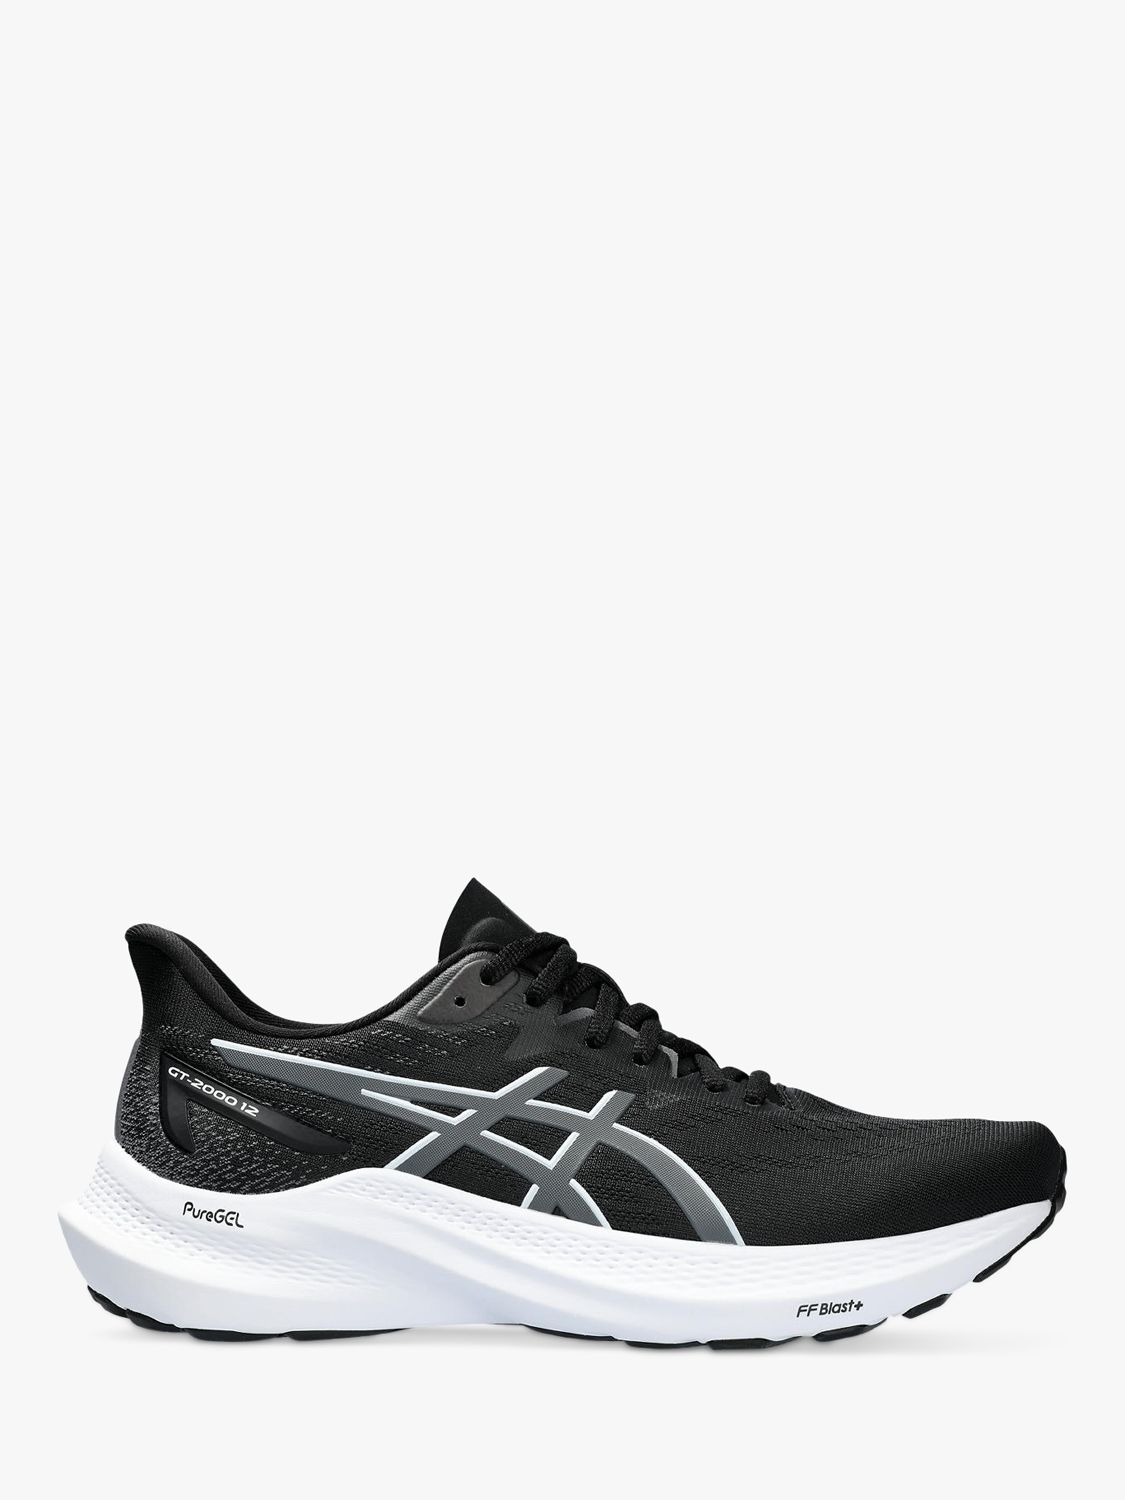 ASICS GT-2000 12 Women's Running Shoes, Black/Carrier Grey at John ...